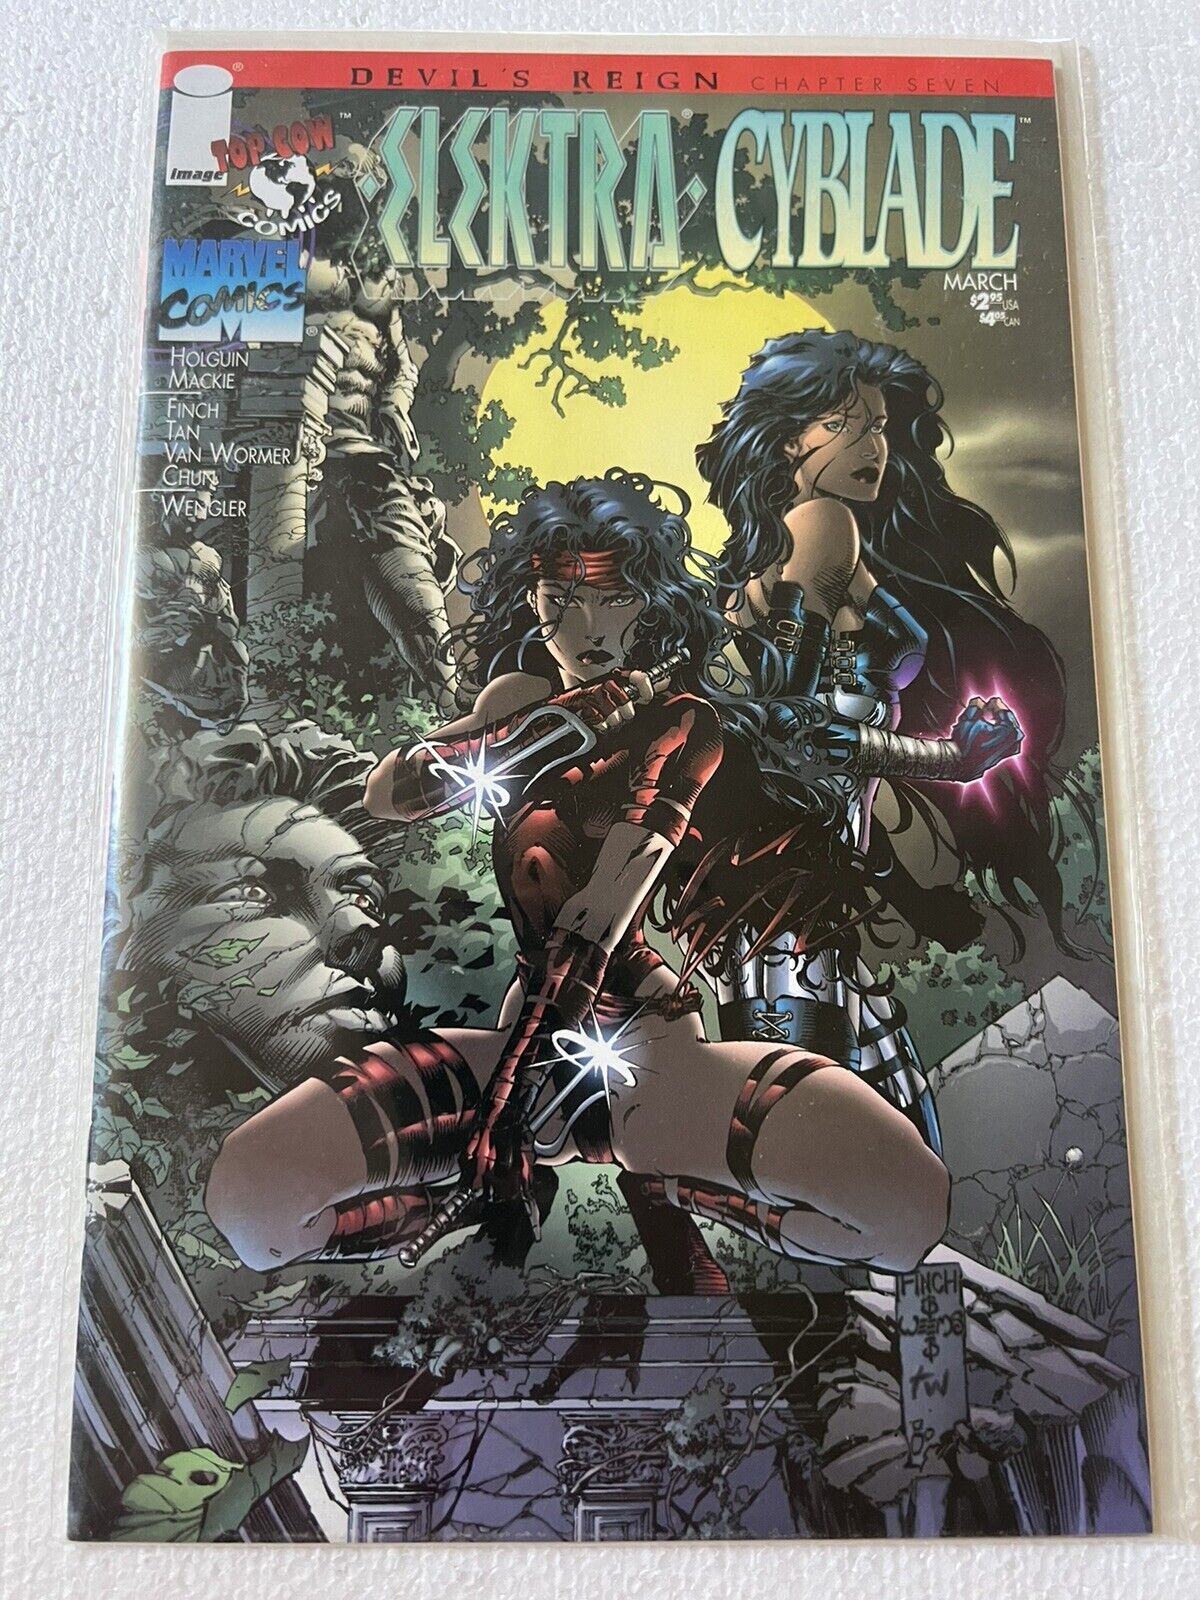 Elektra / Cyblade 1 Marvel / Top Cow Comics 1997 VF NM  8.5 - 9.0  Devil's Reign